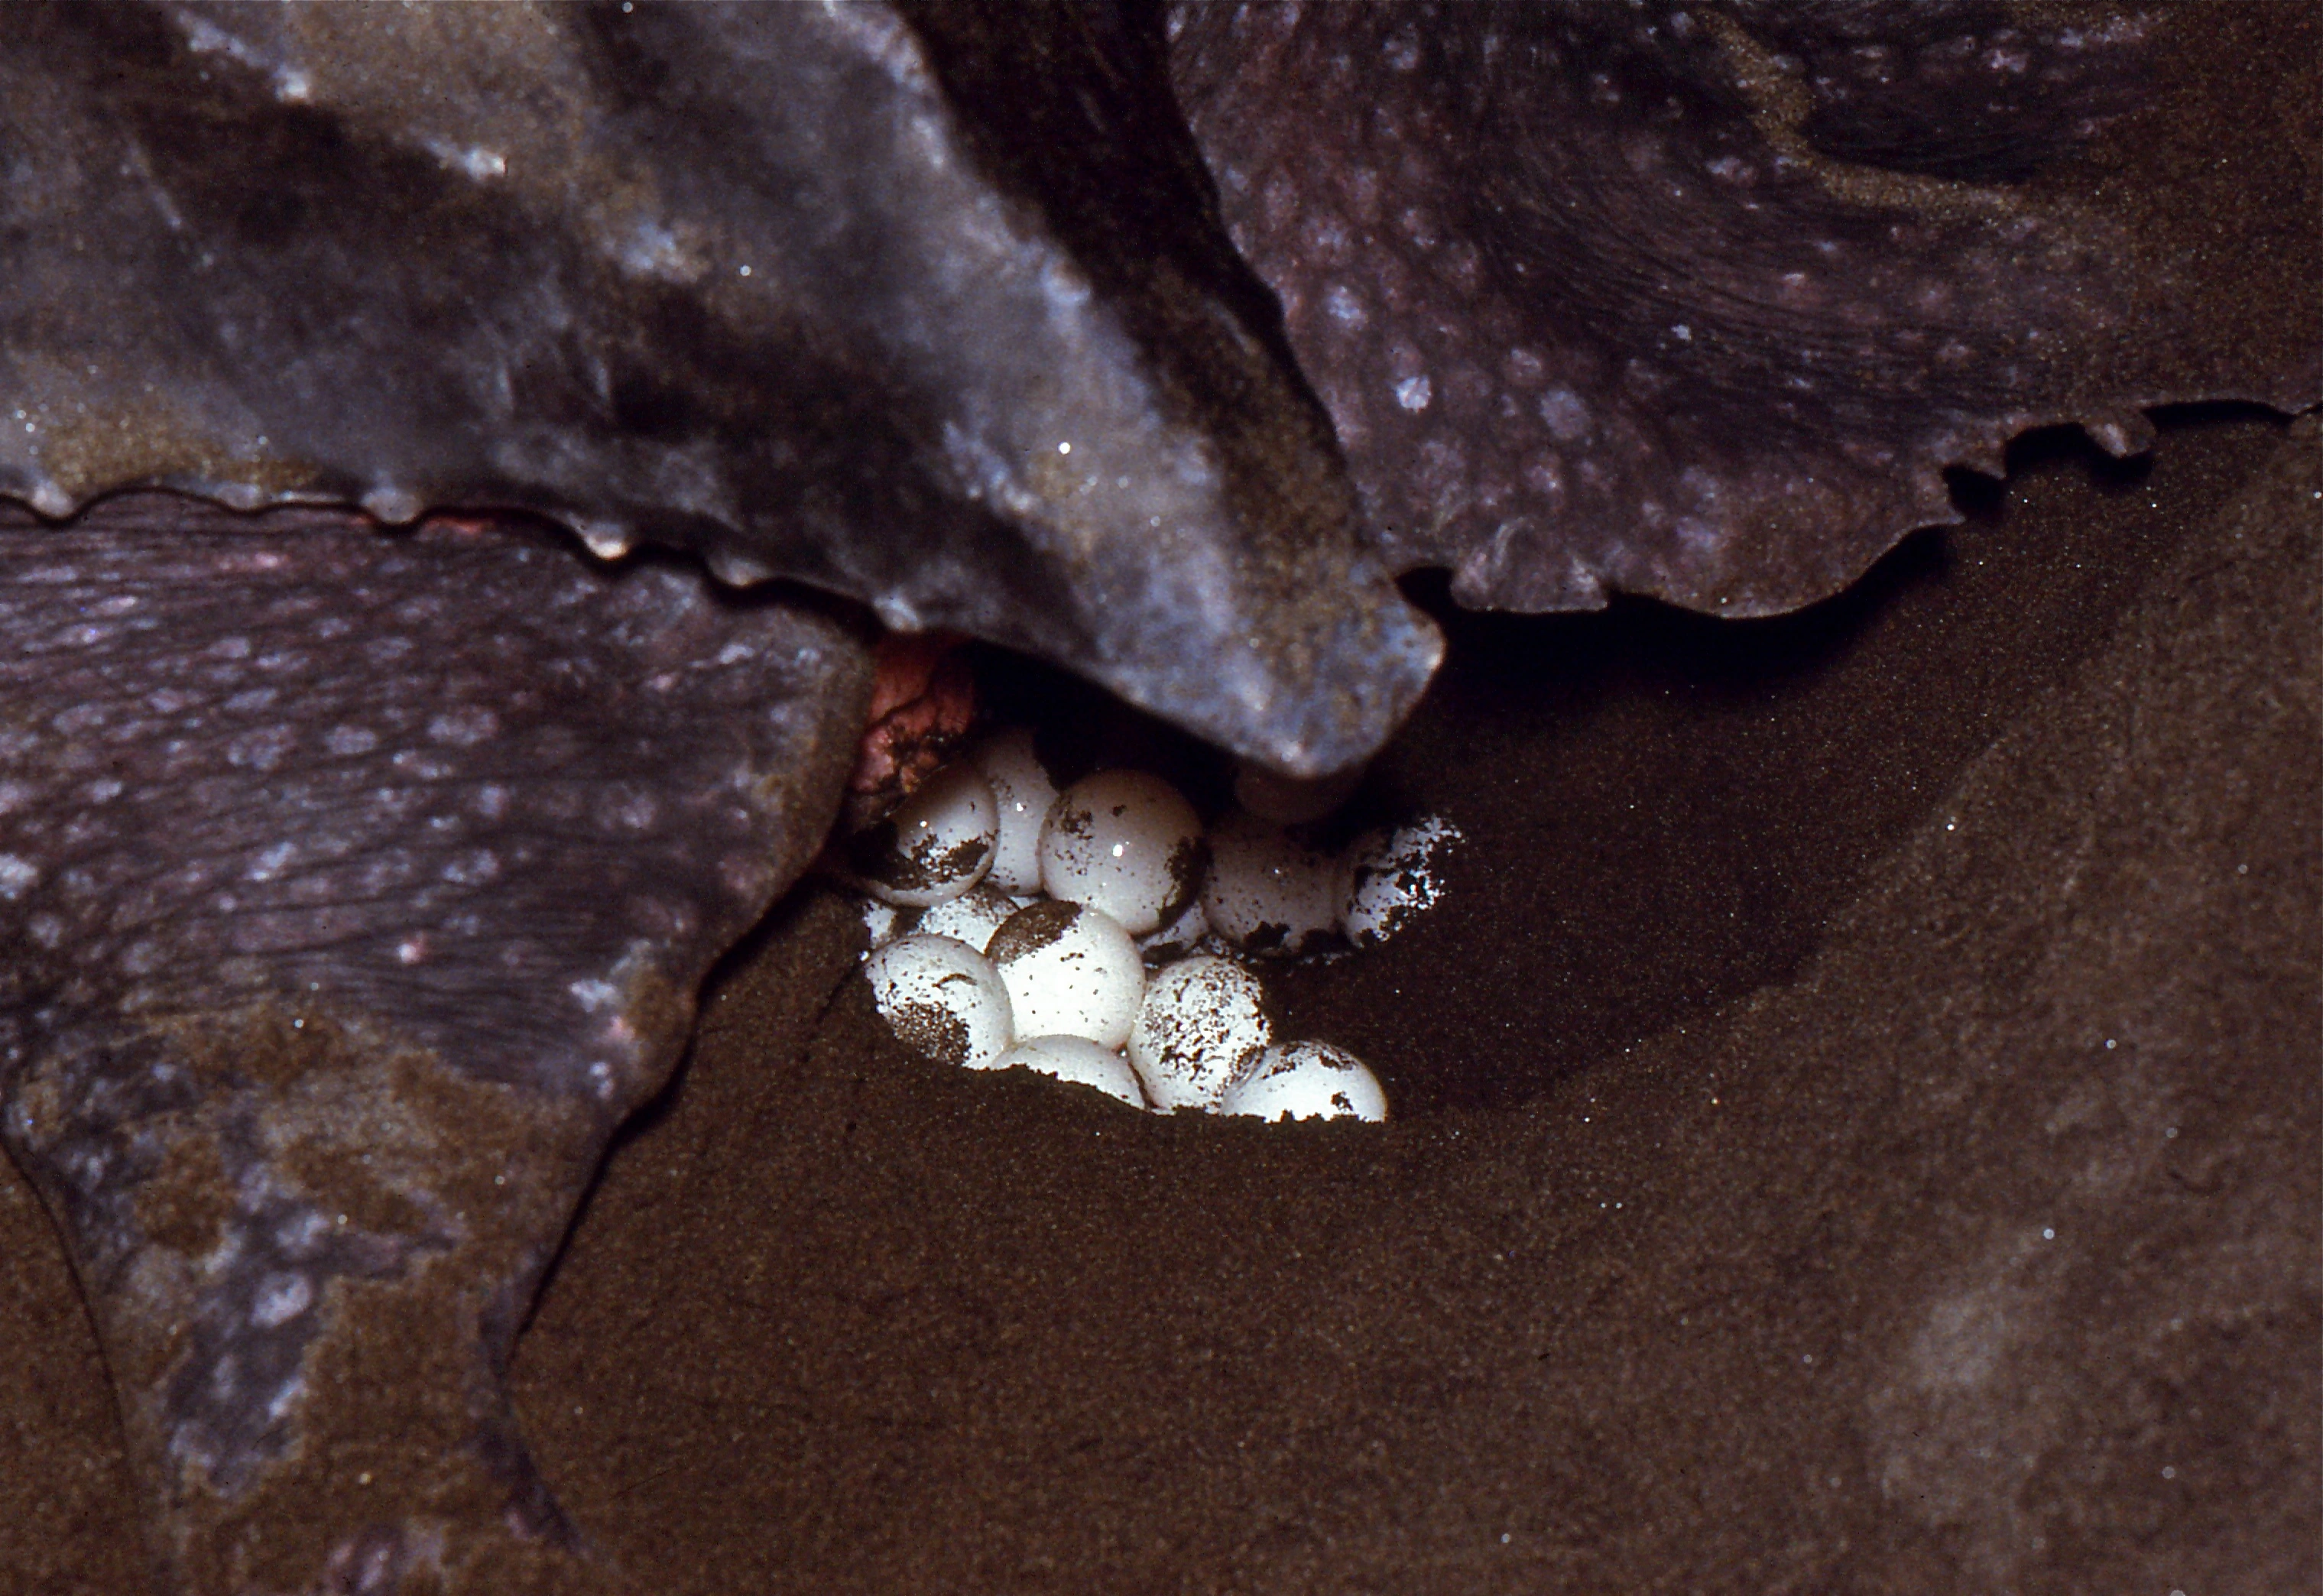 : Dermochelys coriacea.